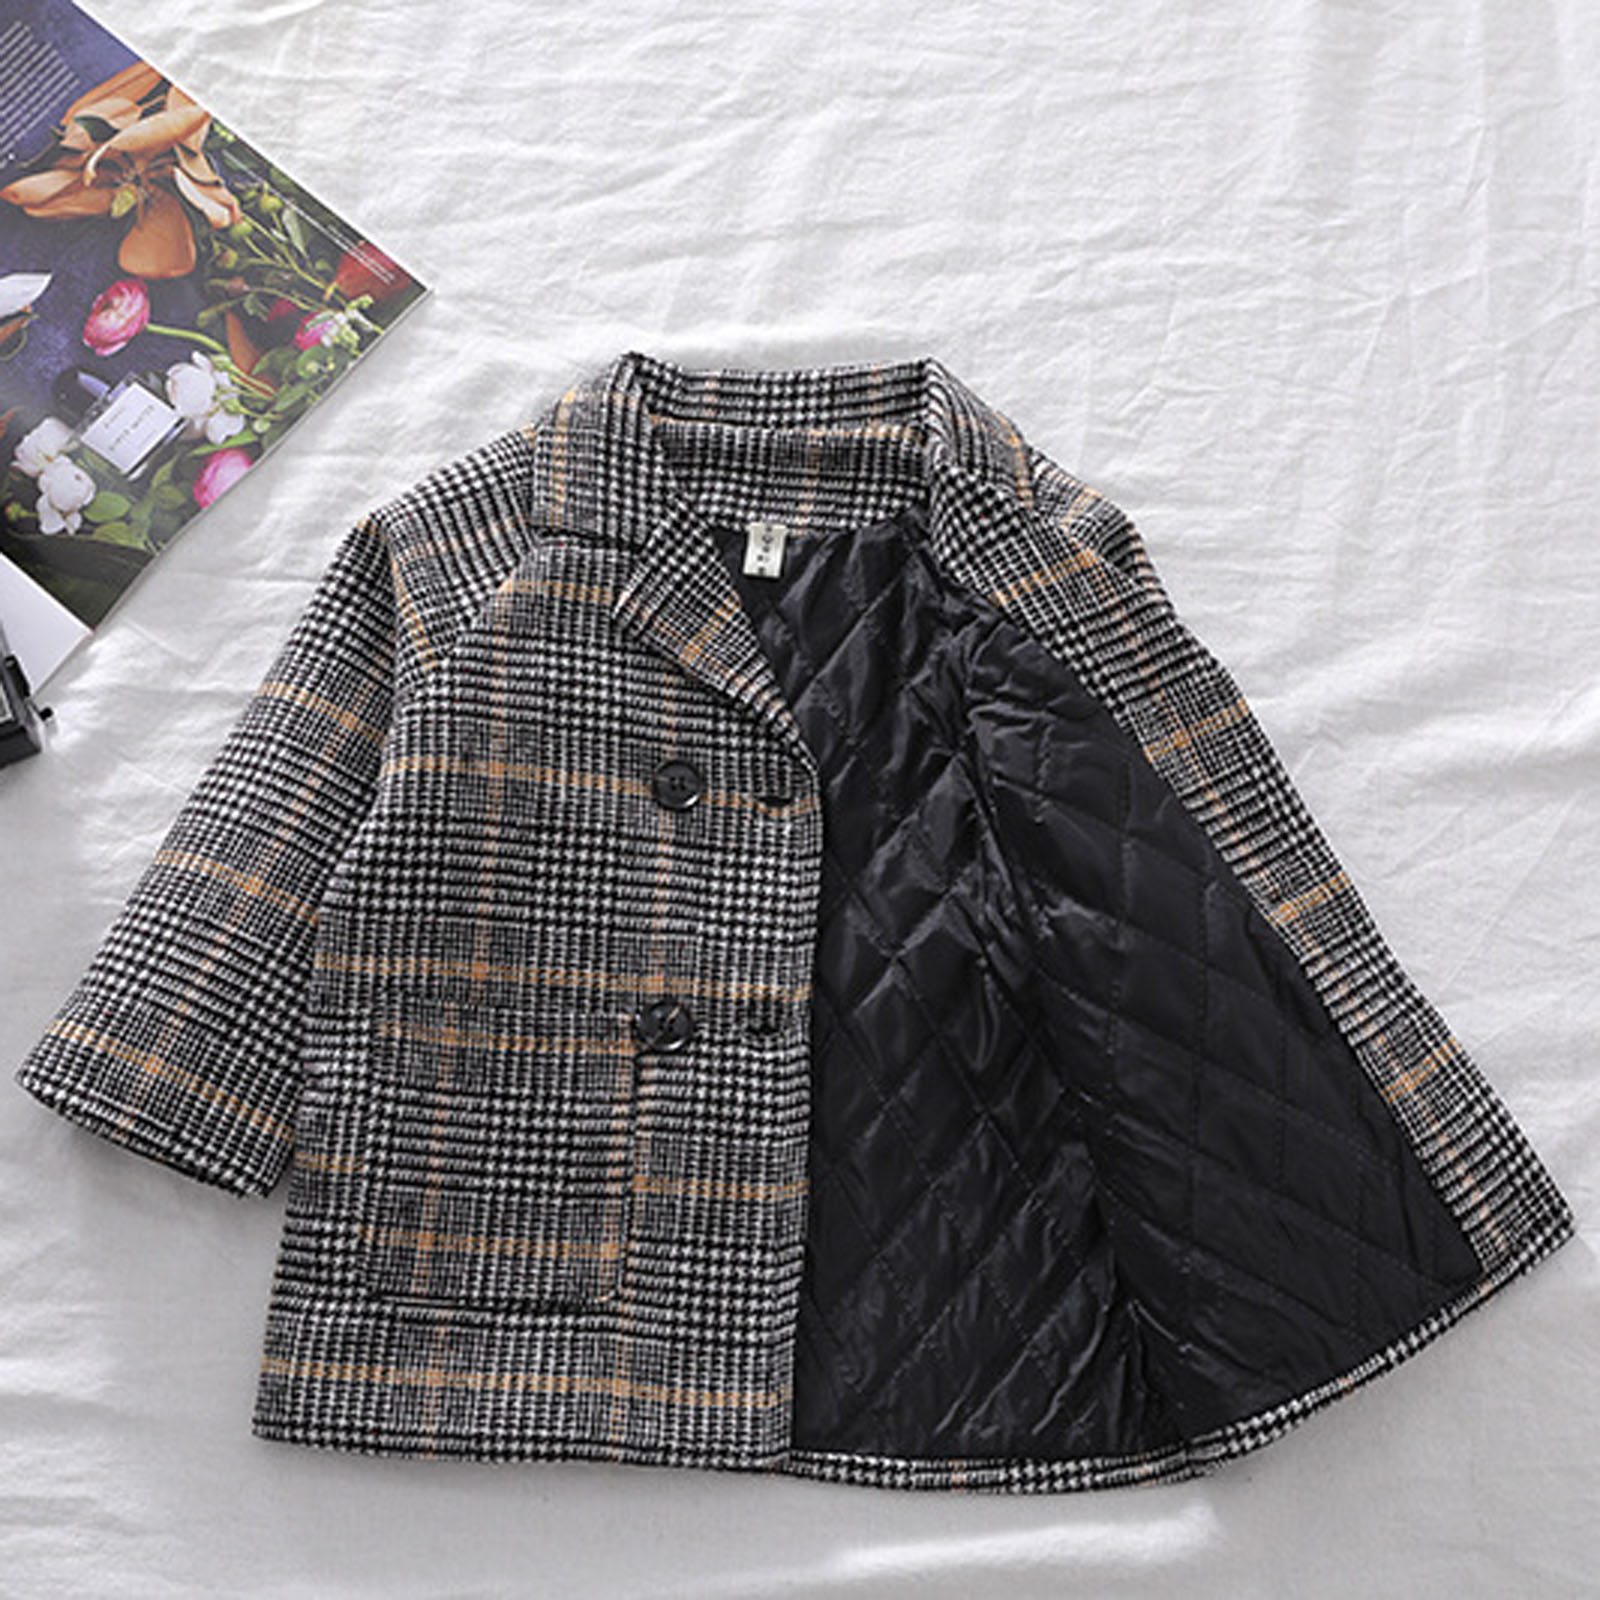 Meihuid Baby Boys Girls Wool Coat Winter Warm Double Breasted Trench Coat Jacket Outwear - image 3 of 6